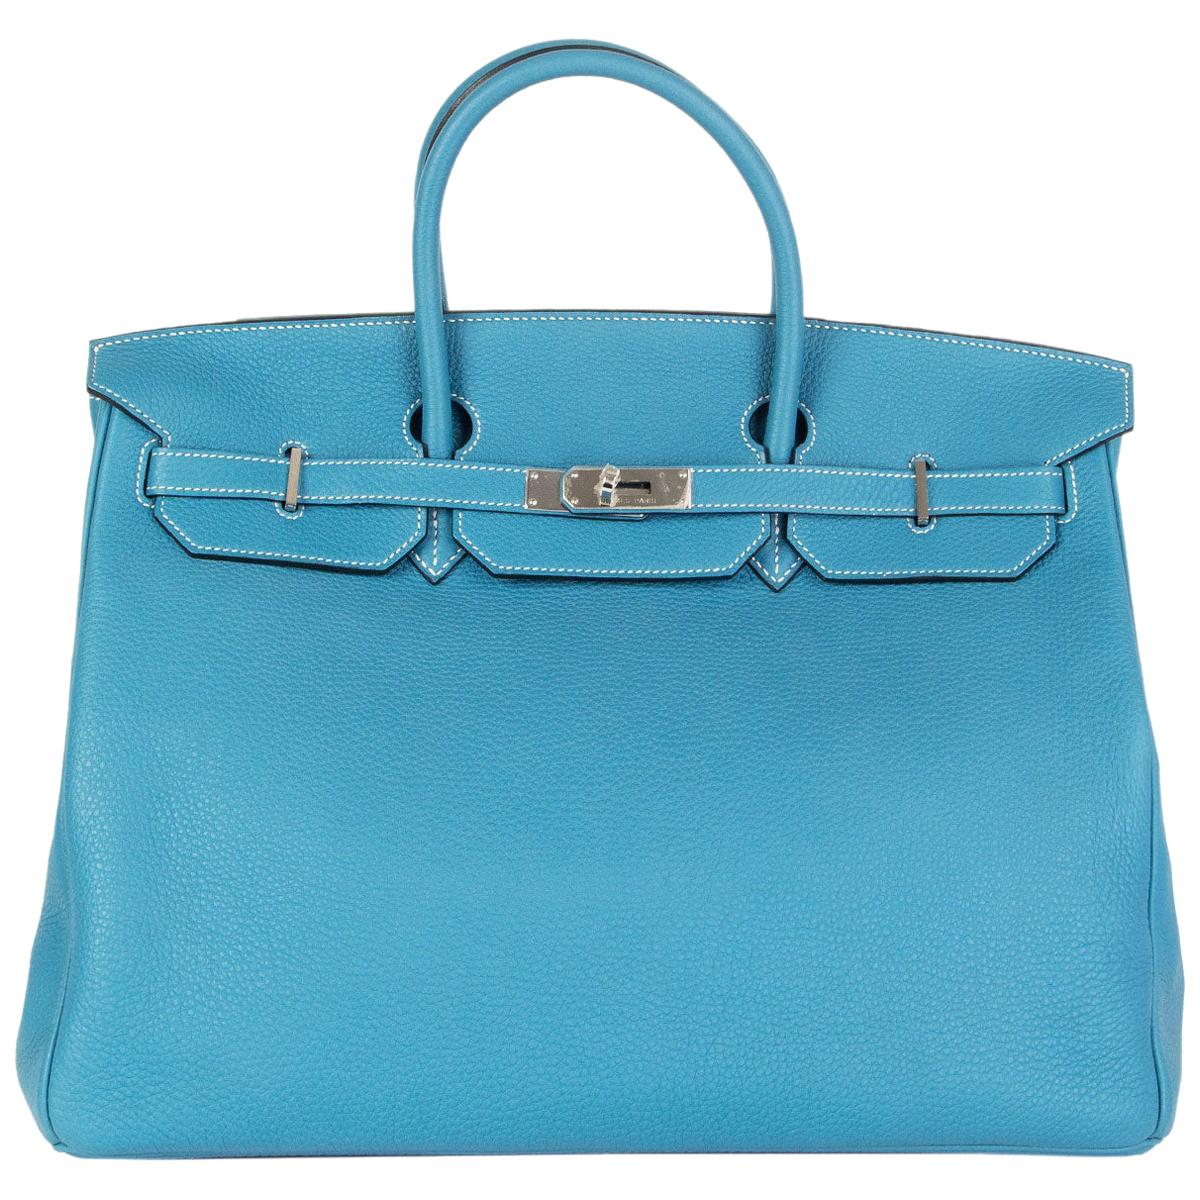 HERMES Blue Jean Togo leather & Palladium BIRKIN 40 Bag